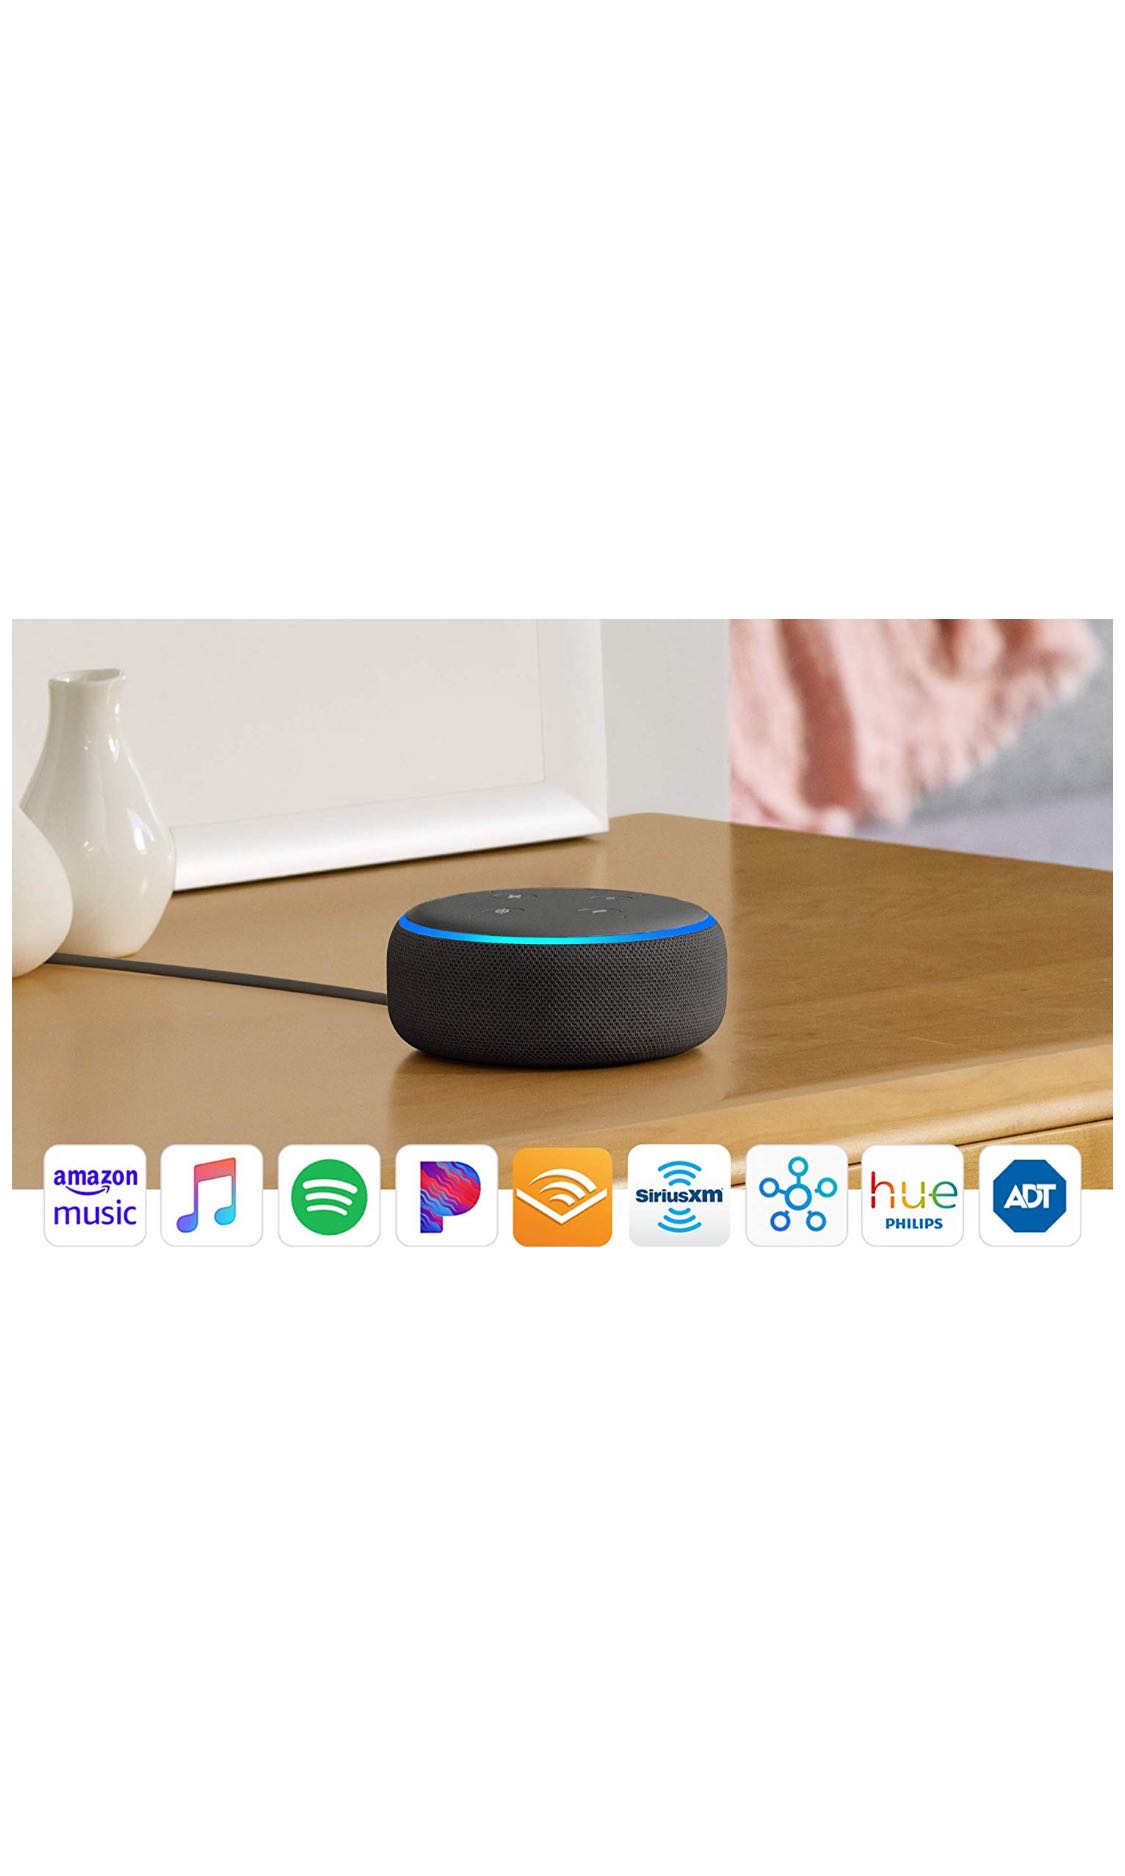 Amazon Echo 3rd gen - brand new and unopened